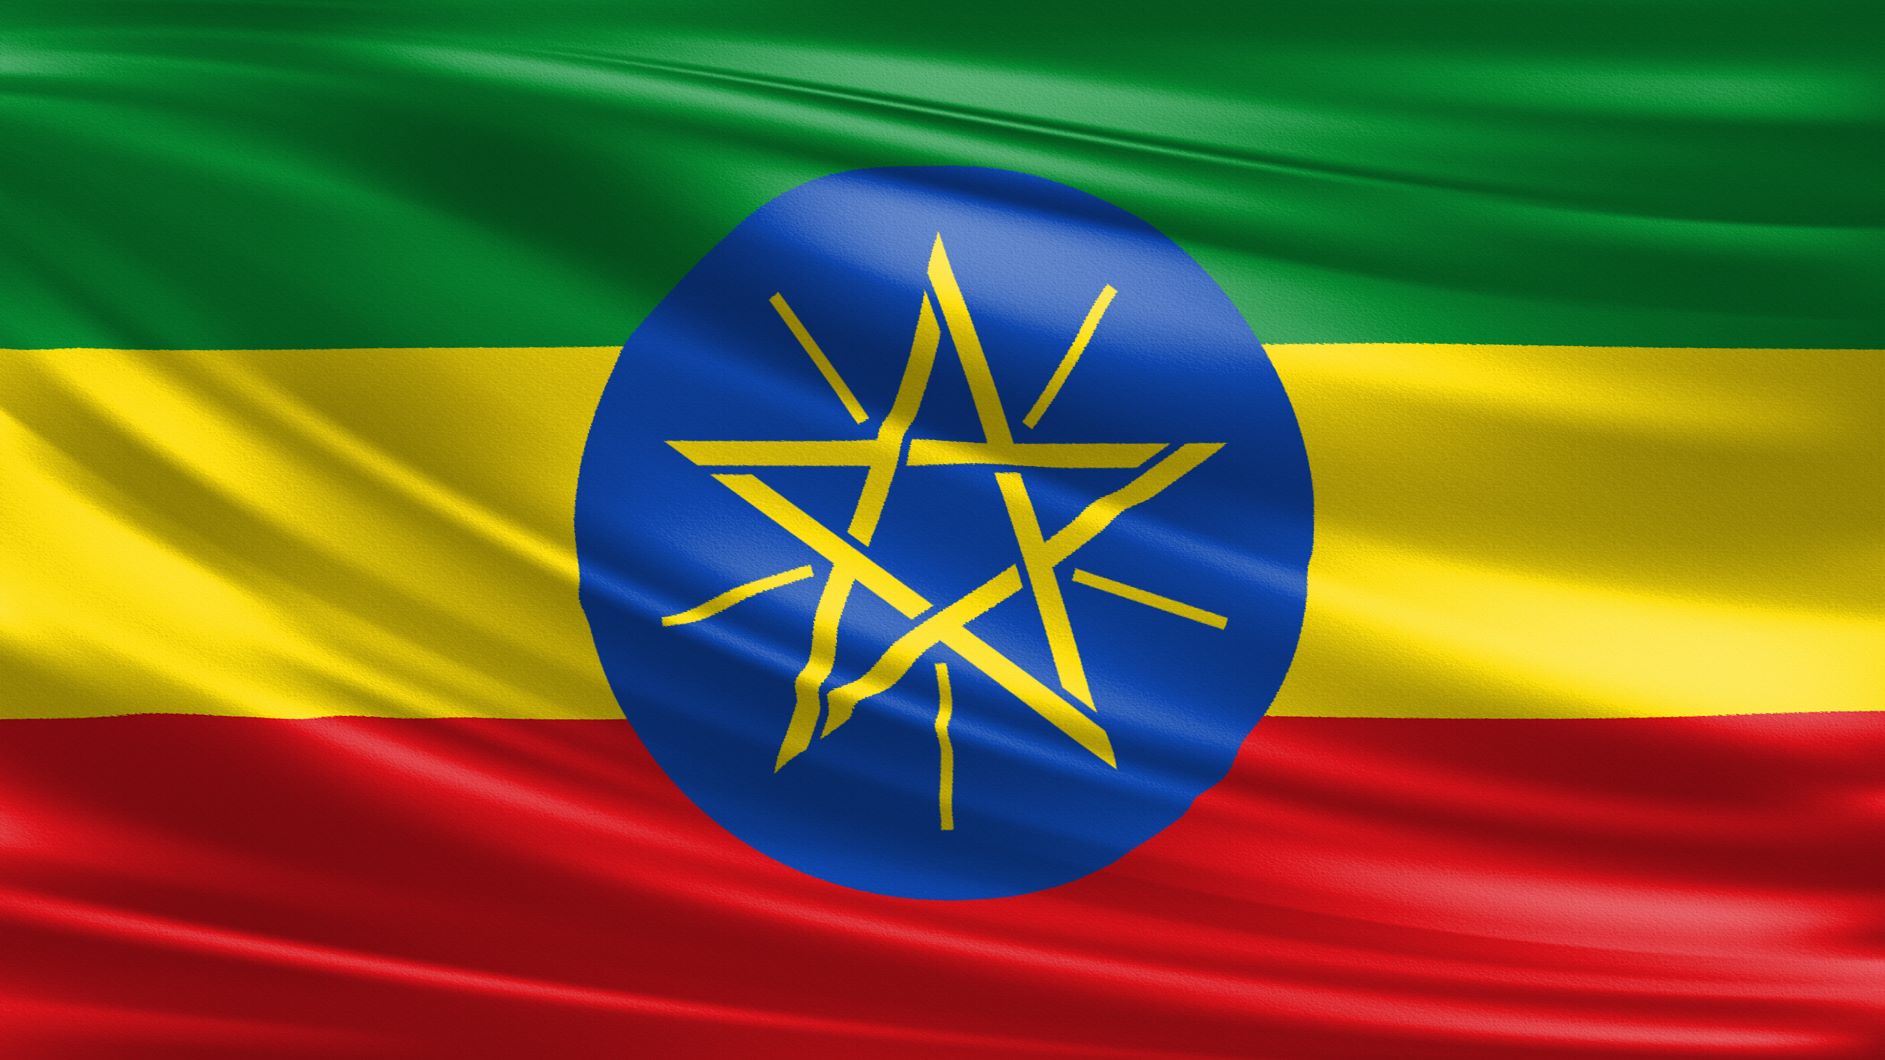 Ethiopia protests ‘ill-advised’ speech by US ambassador